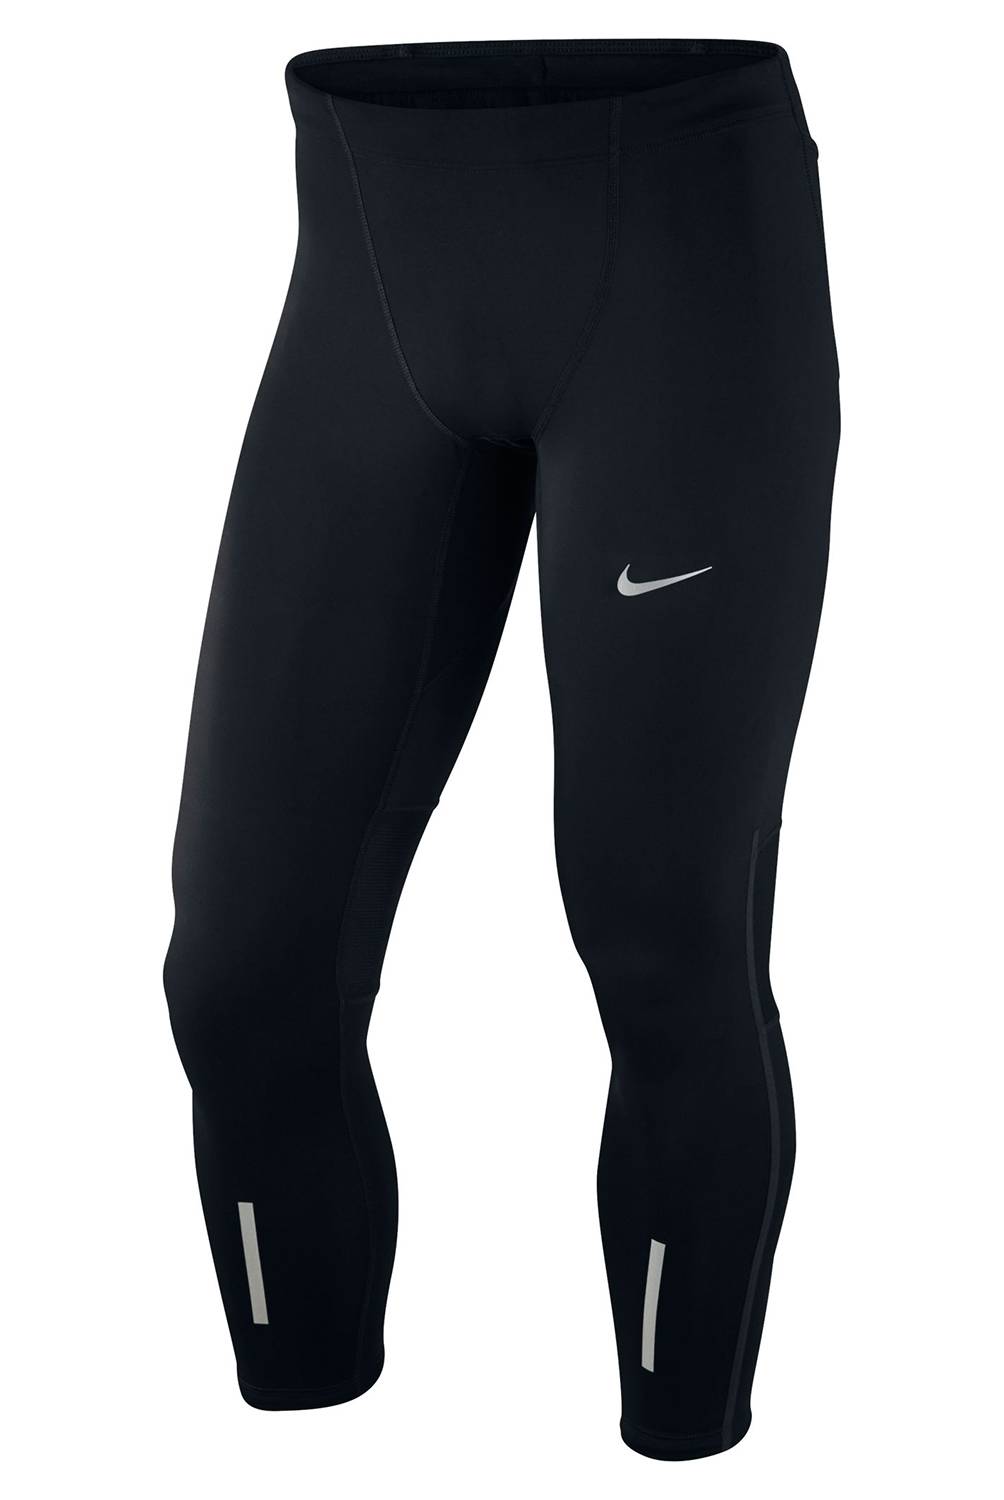 Nike - Calza Hombre Tech Running Tights